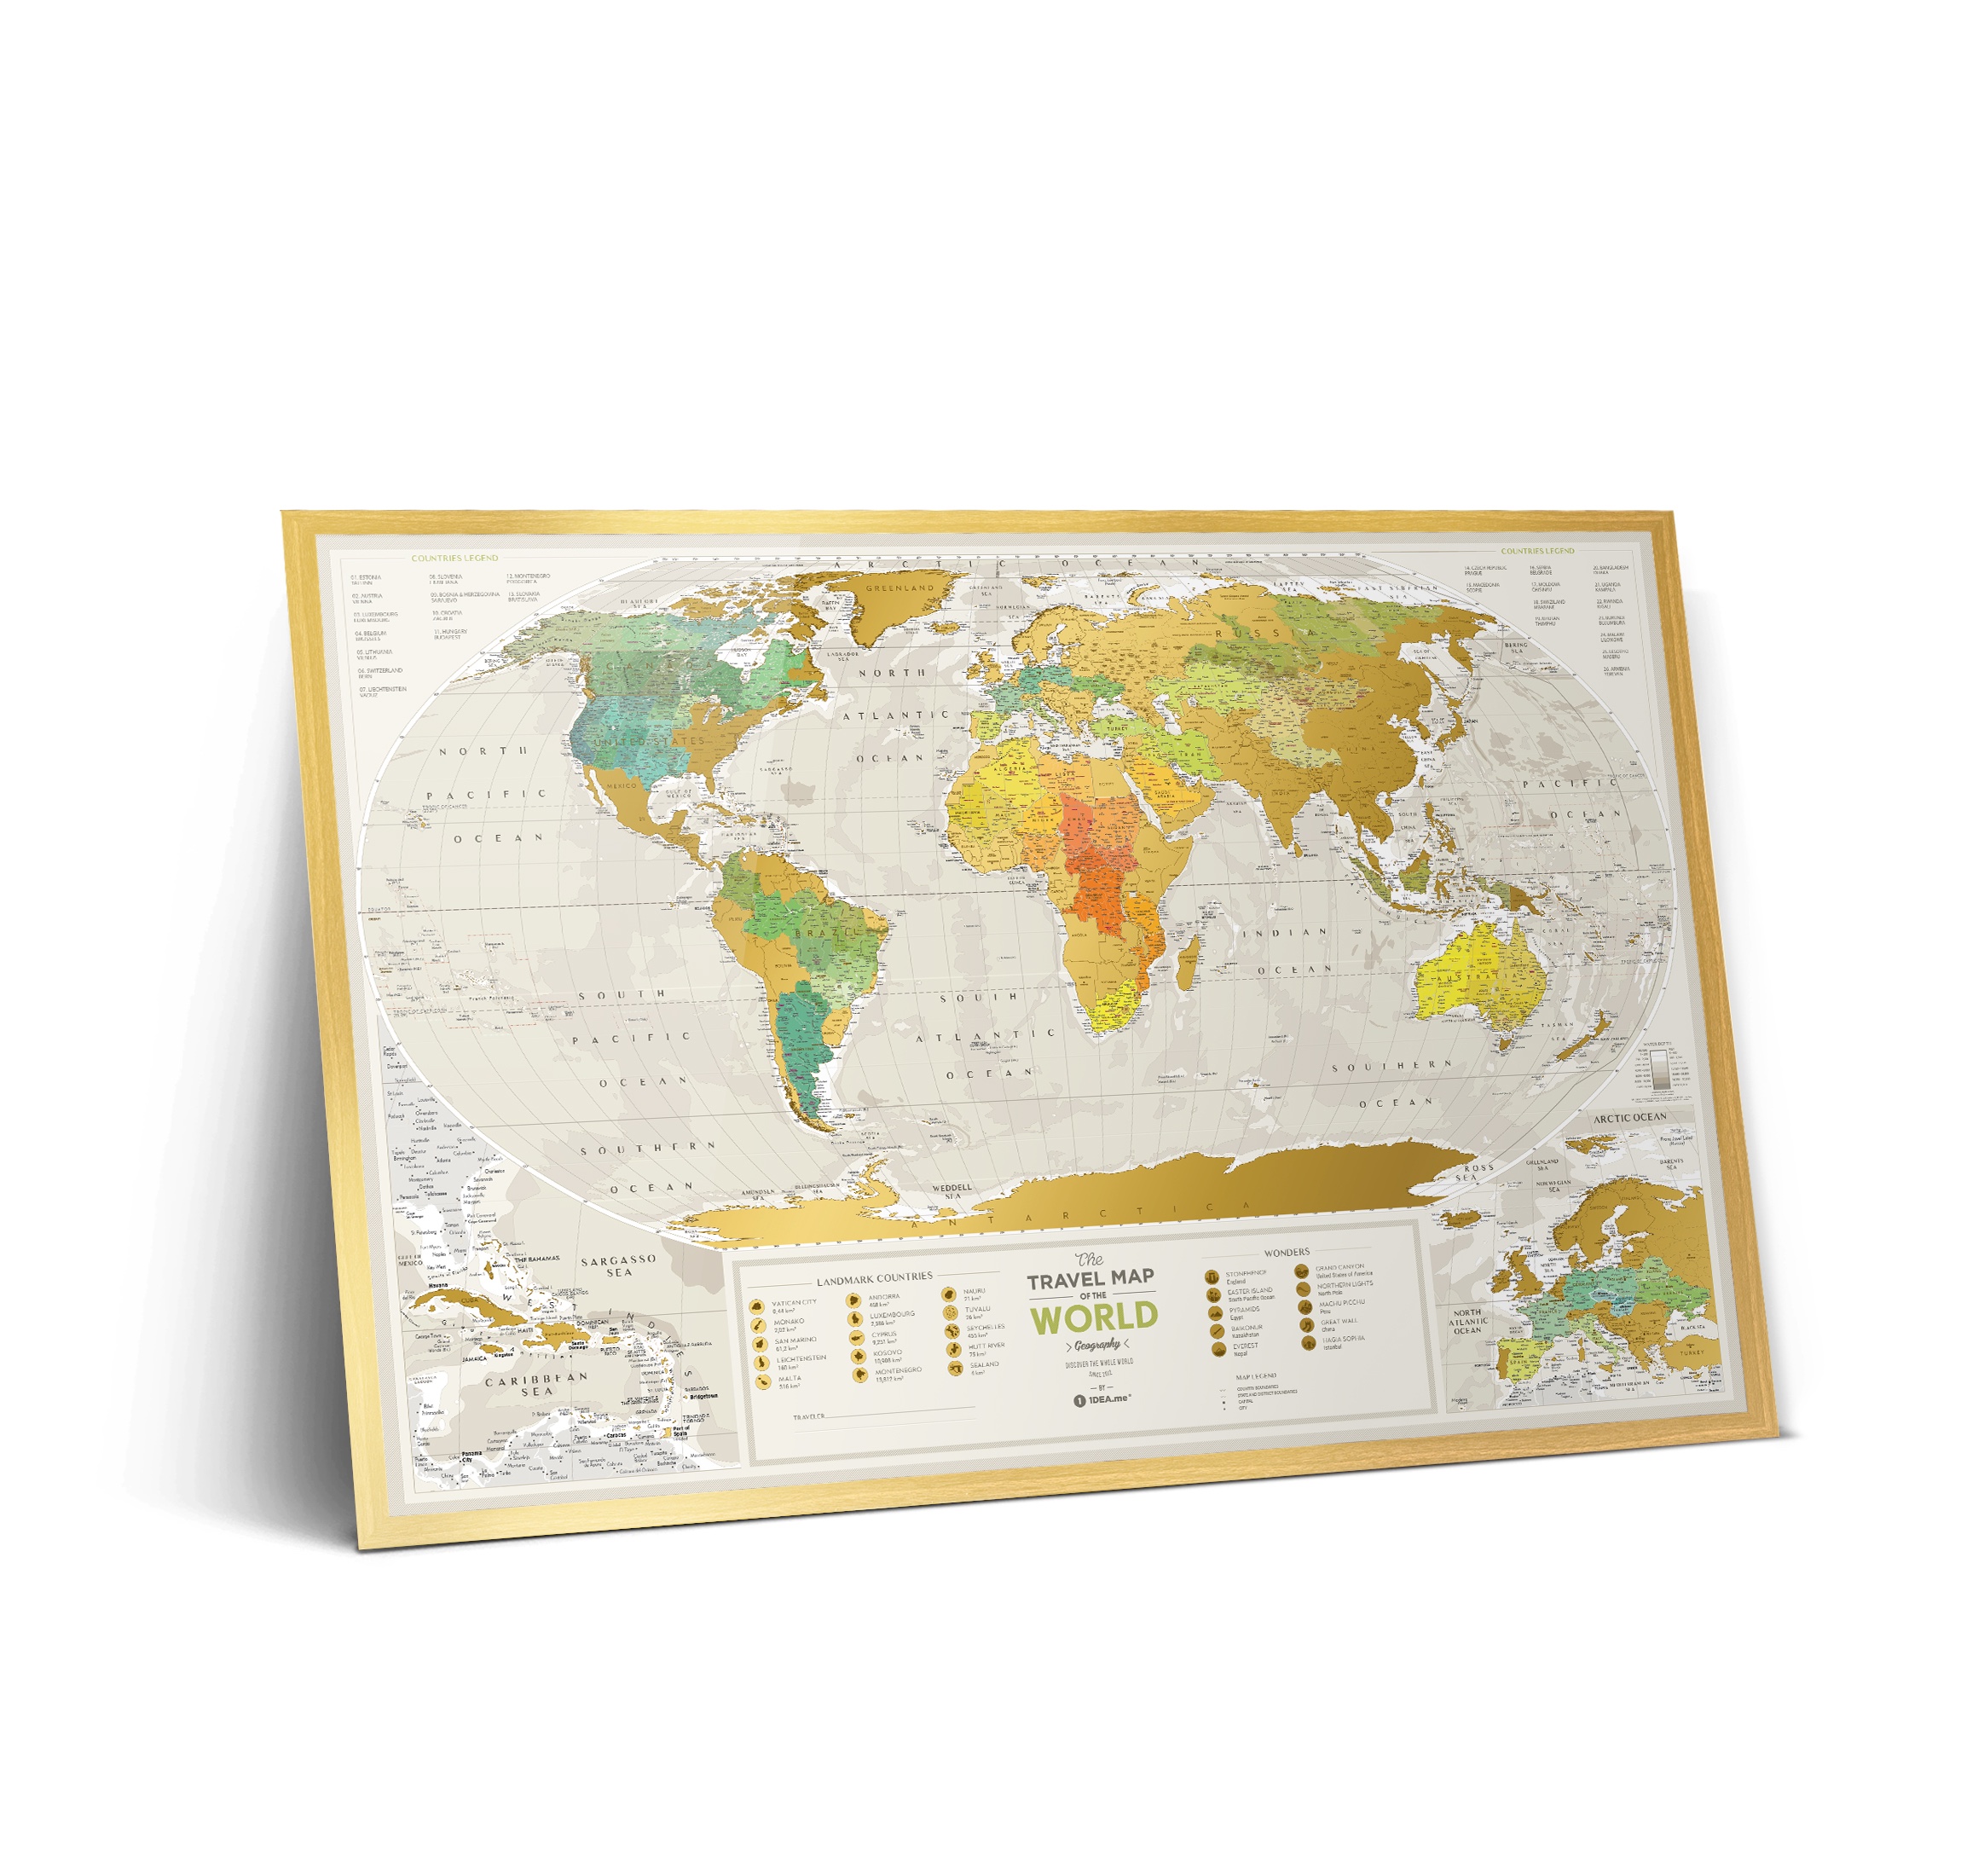 Scratch Map rosa Rosegold Edition Rubbel Weltkarte Reisekarte zum Abrubbeln